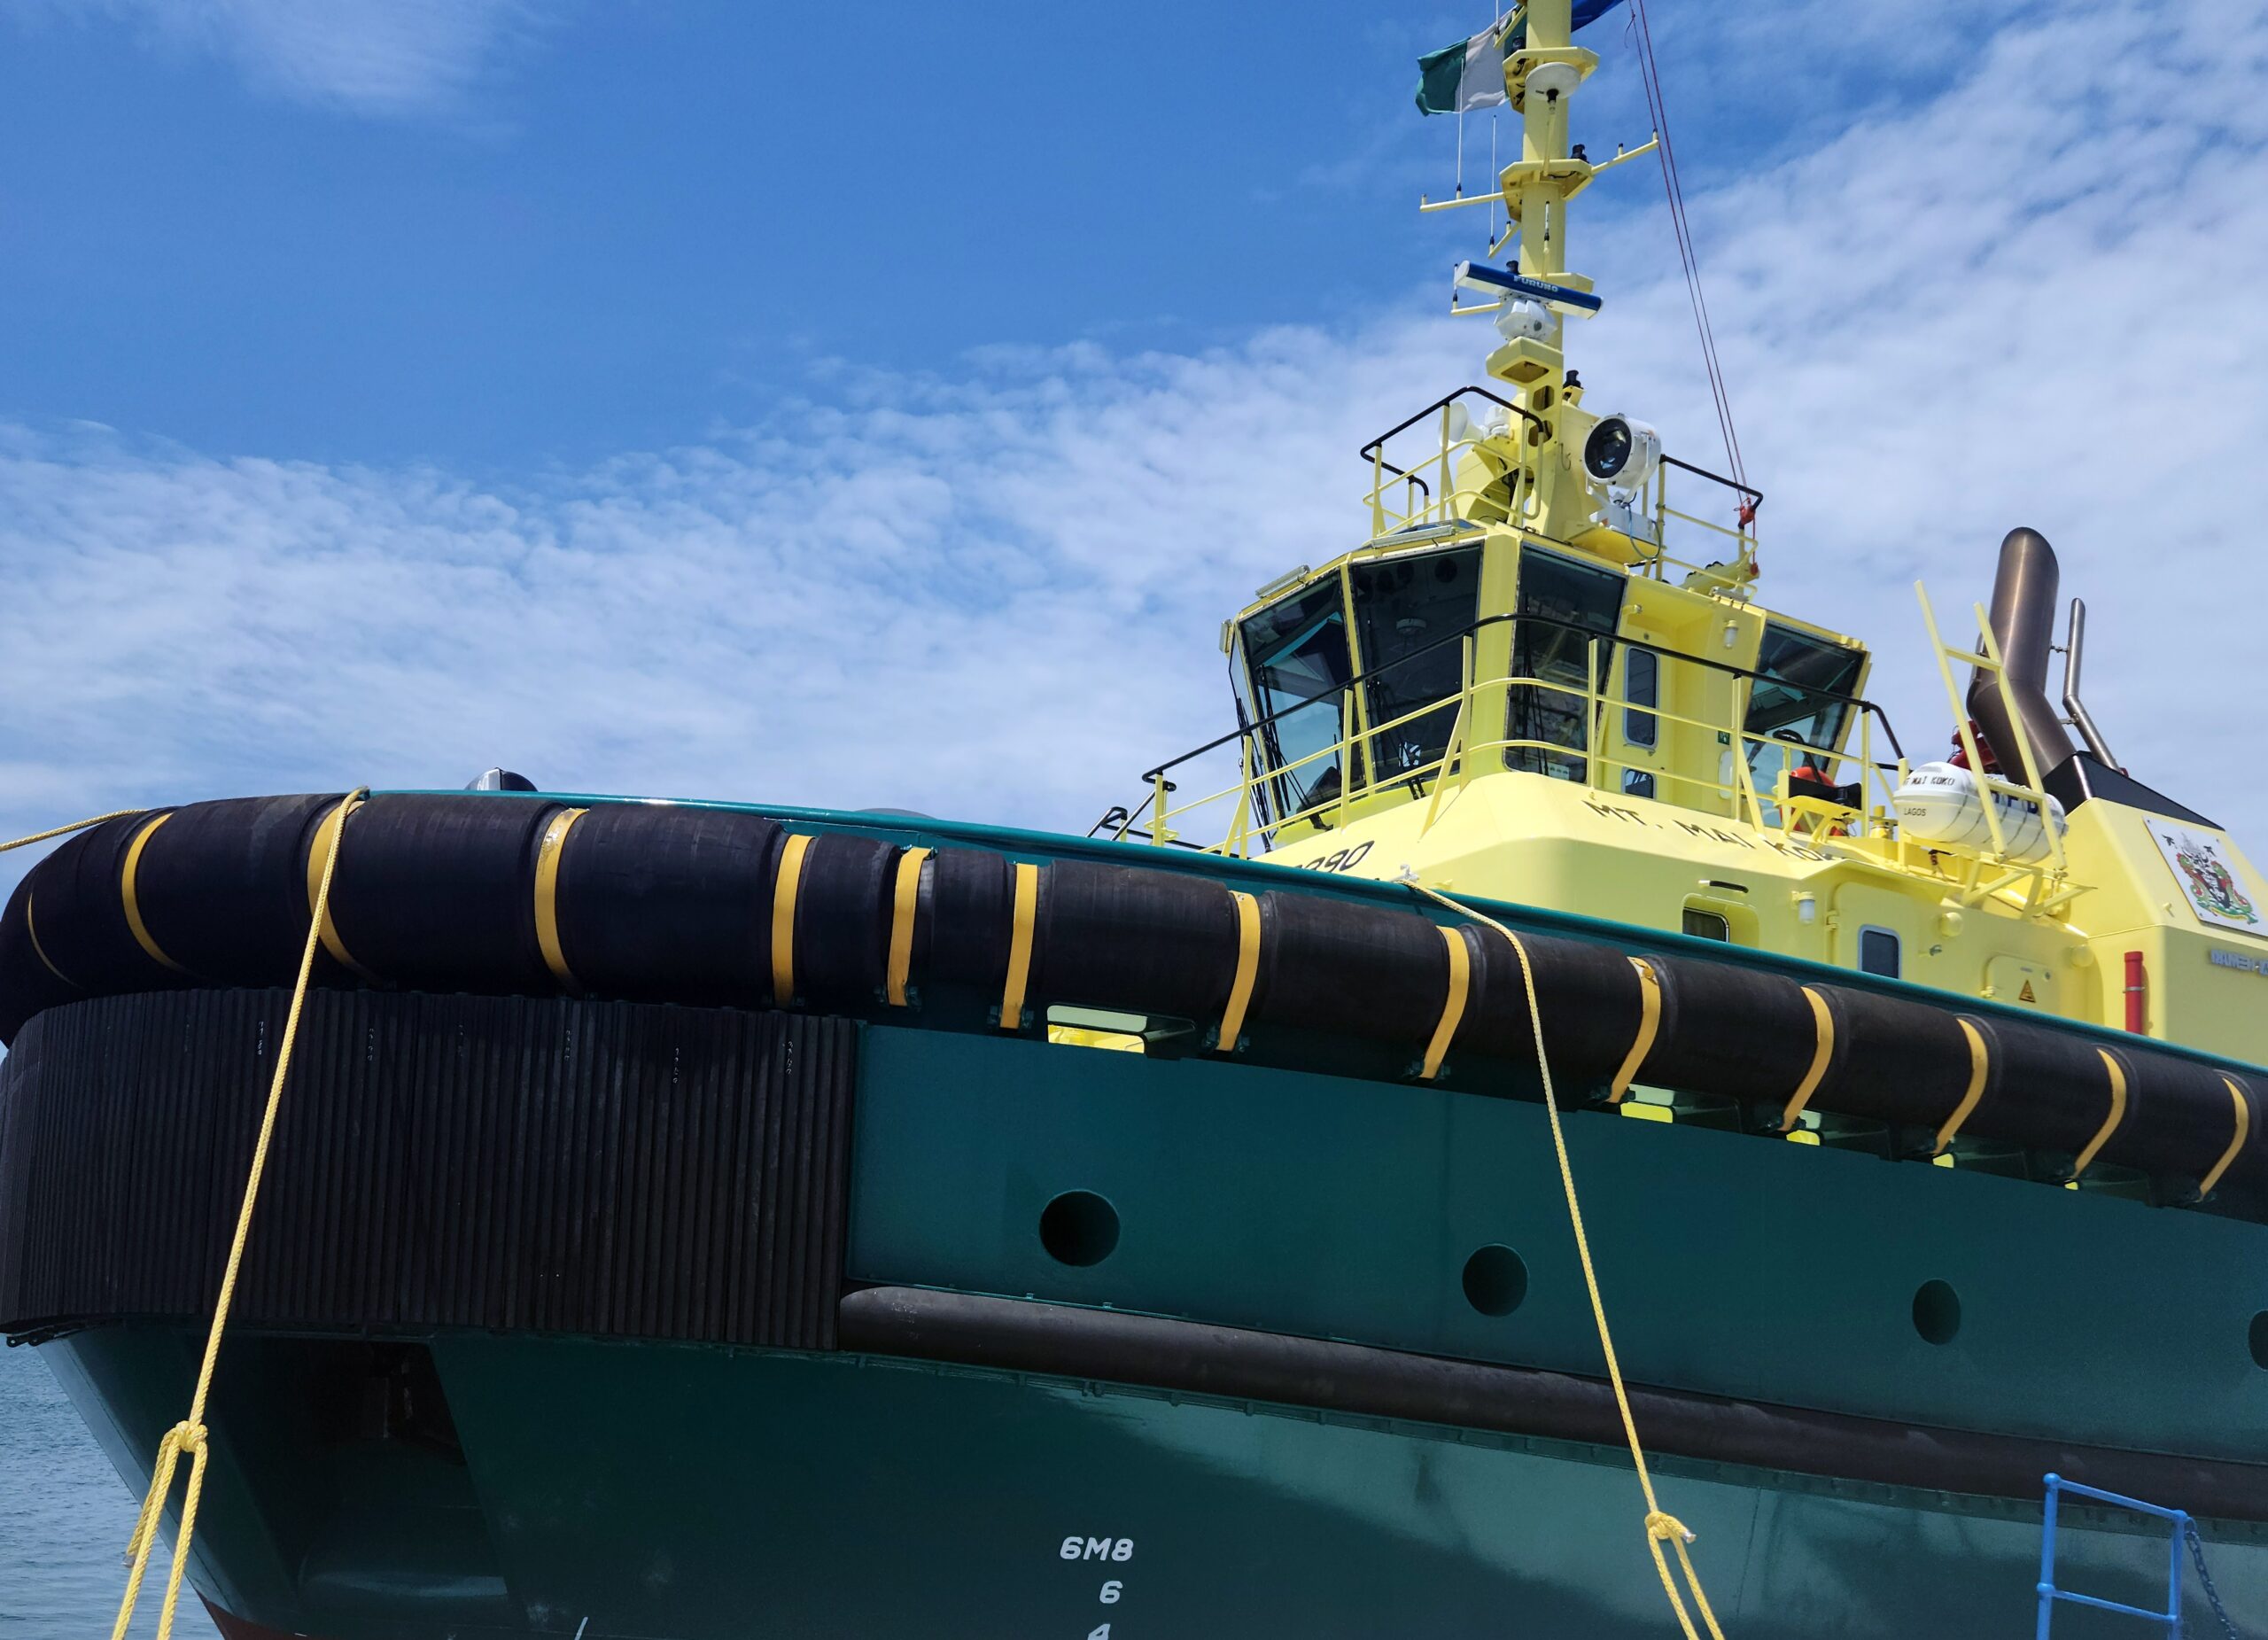 Image of 80-ton Bollard Pull Tugboats [Image Credit: LIDA Network]